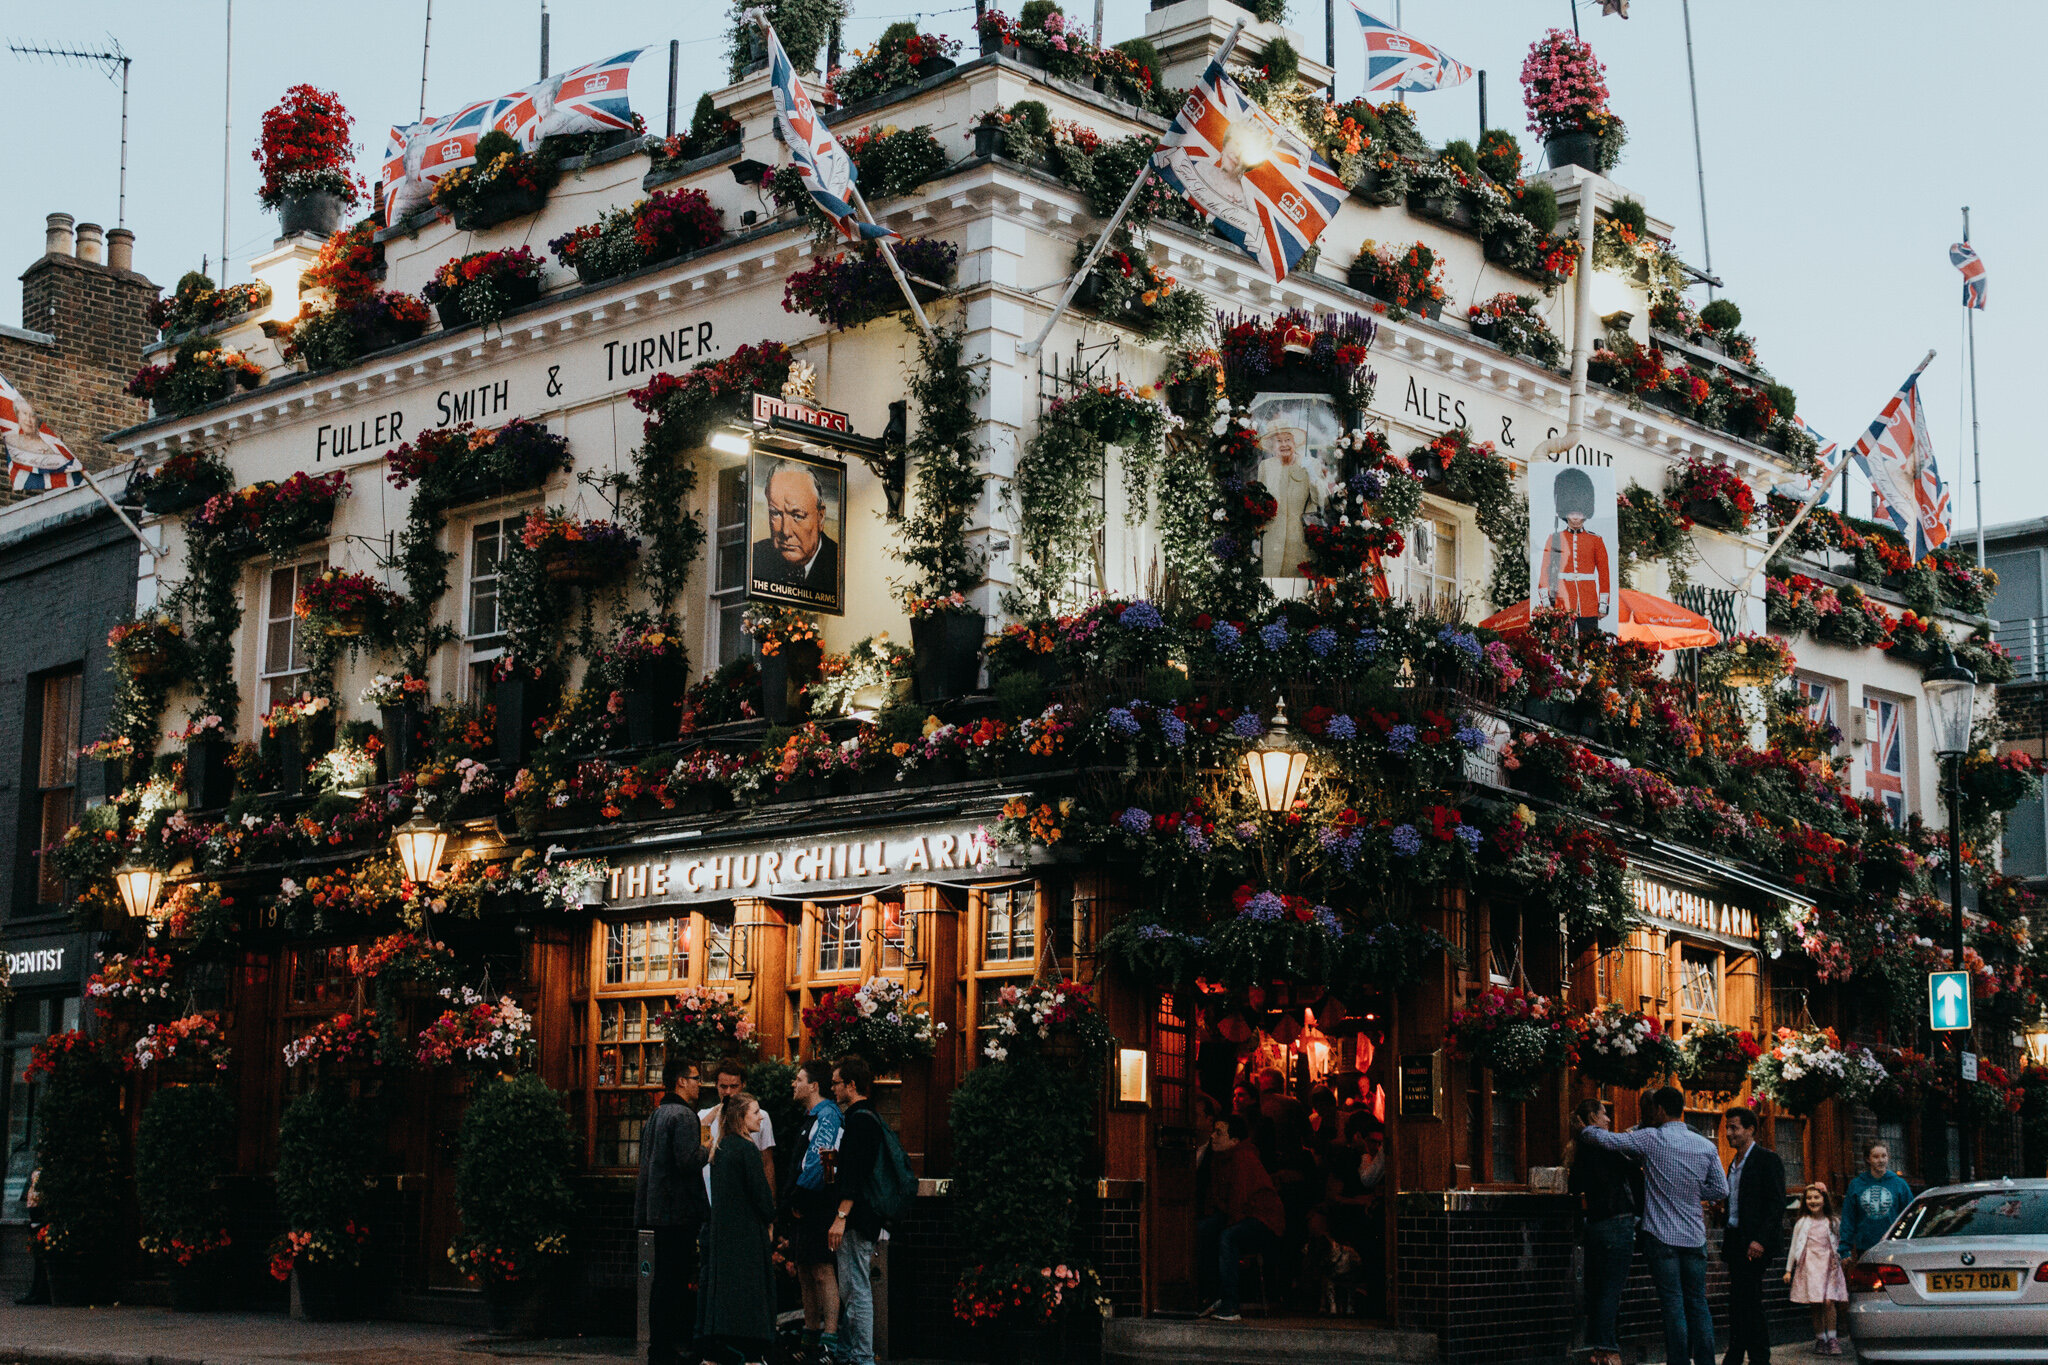 The Churchill Pub, London